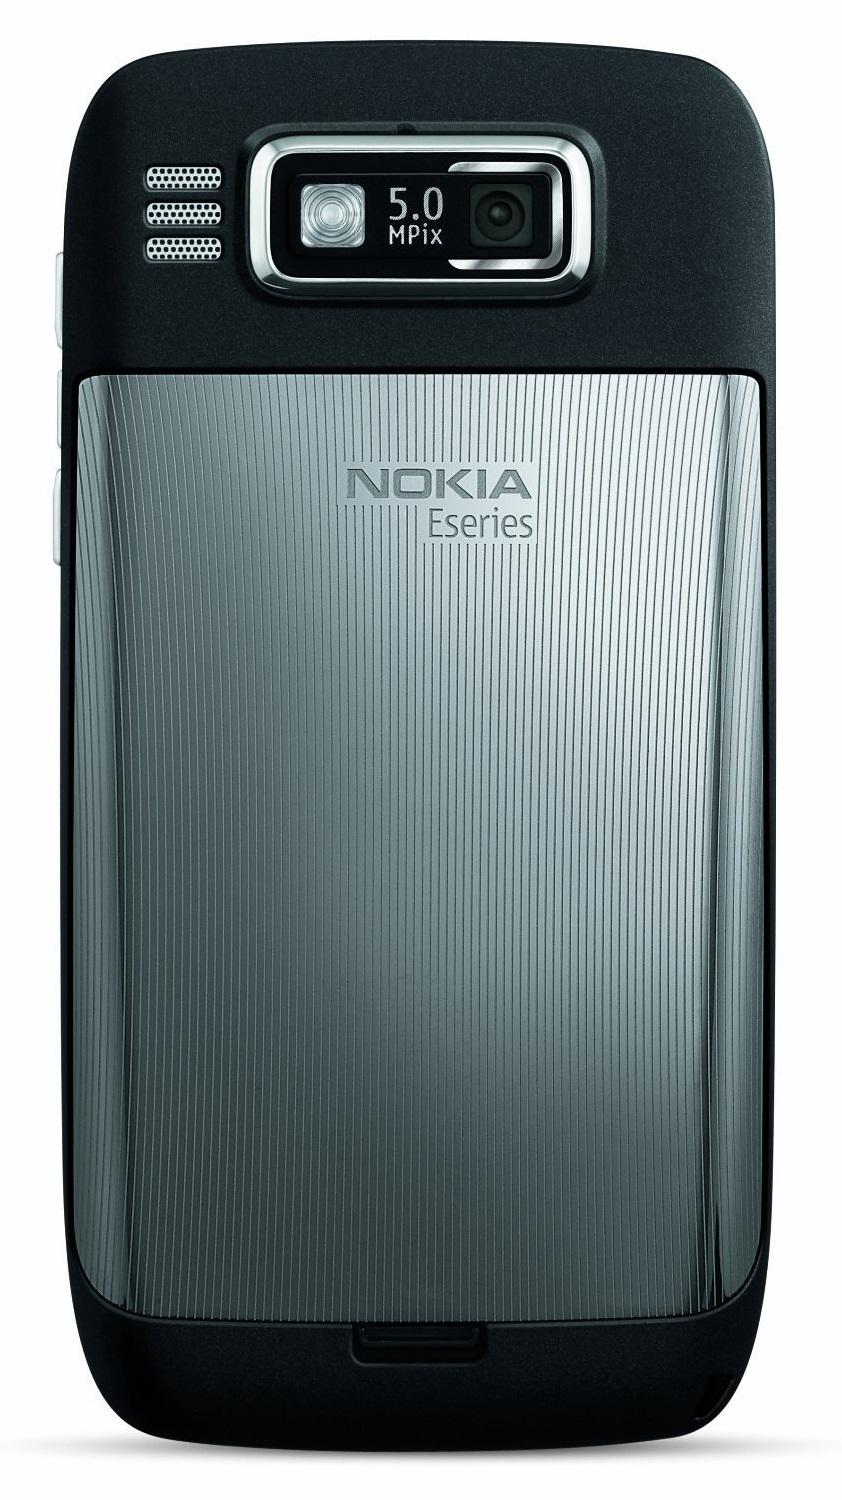 Nokia e72 navi zodium black